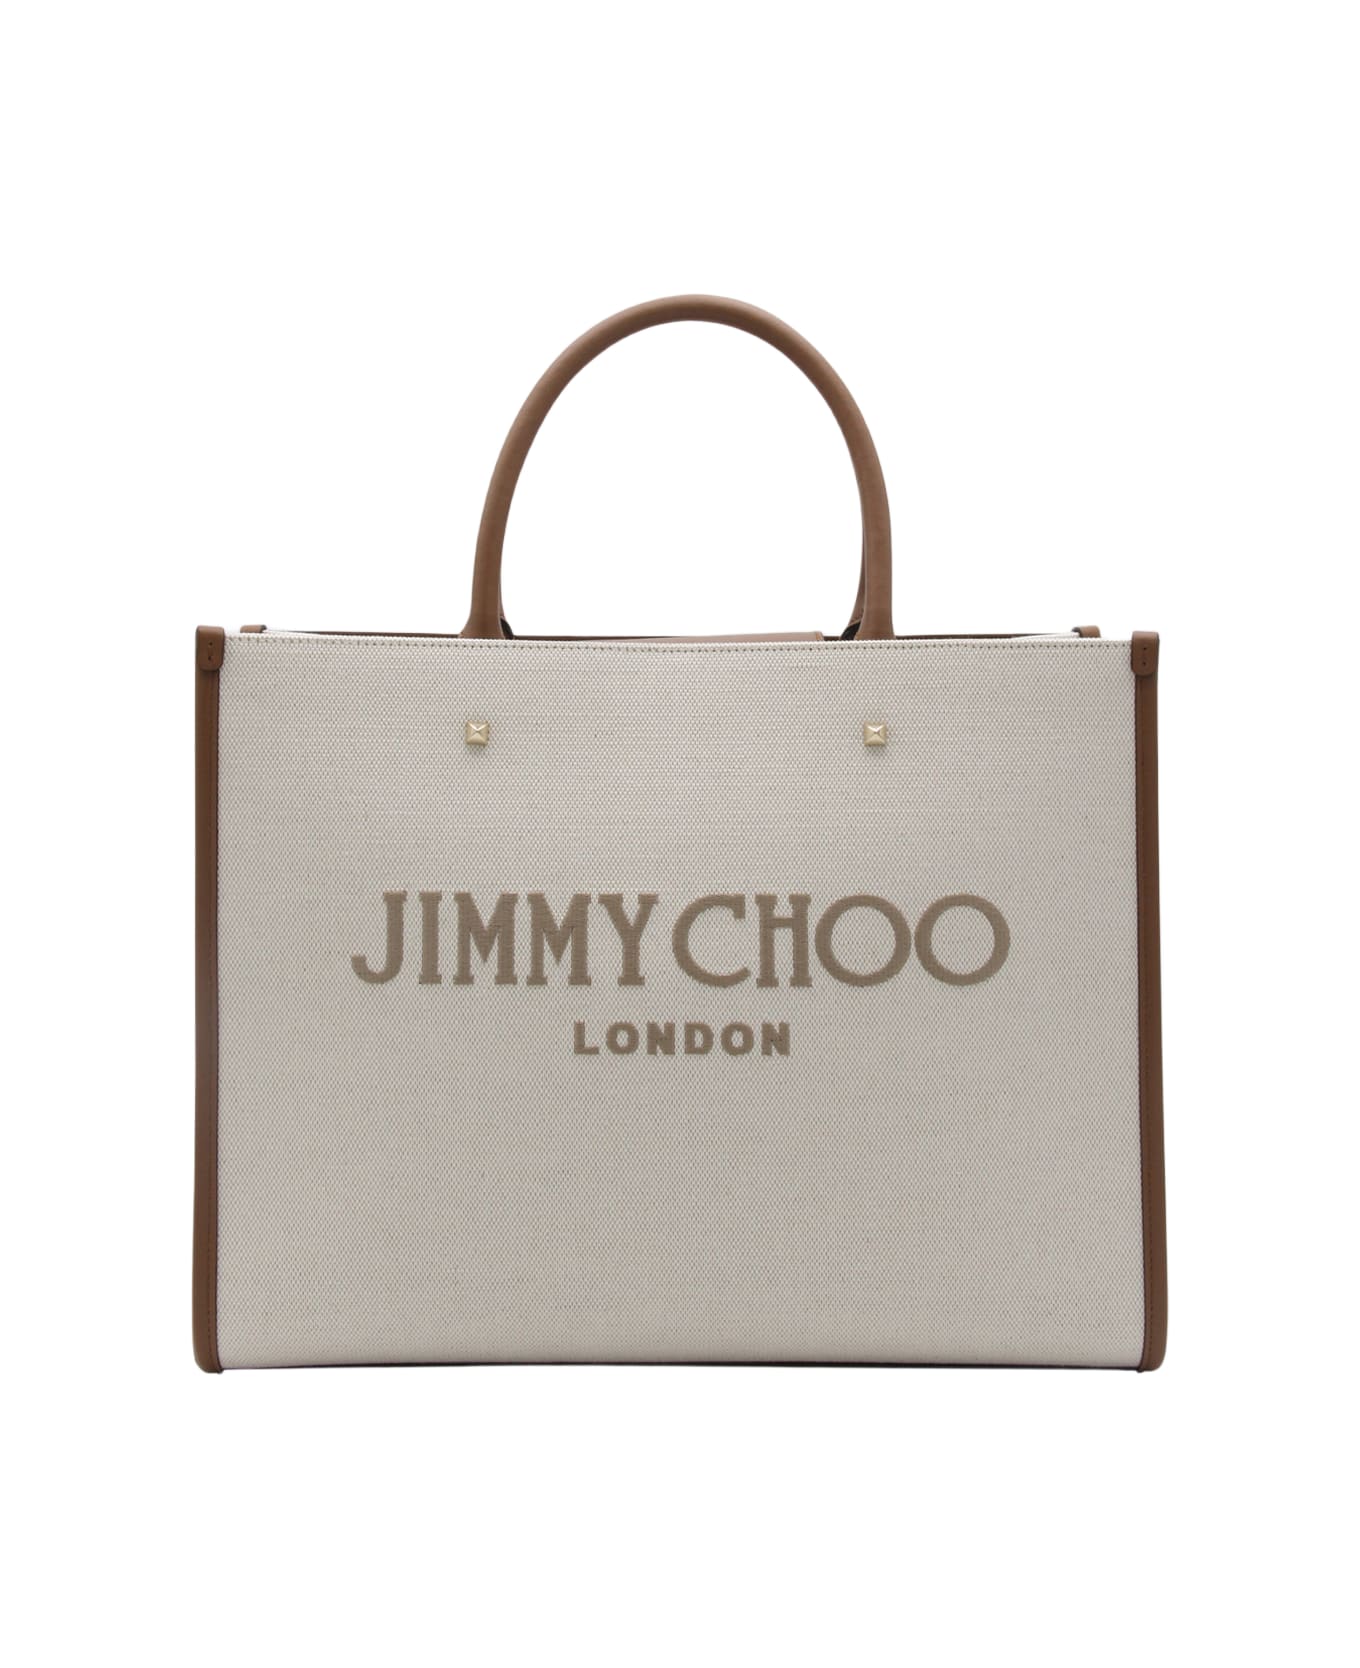 Jimmy Choo Natural And Taupe Canvas Avenue Medium Tote Bag - Naturaltaupe drak tan light